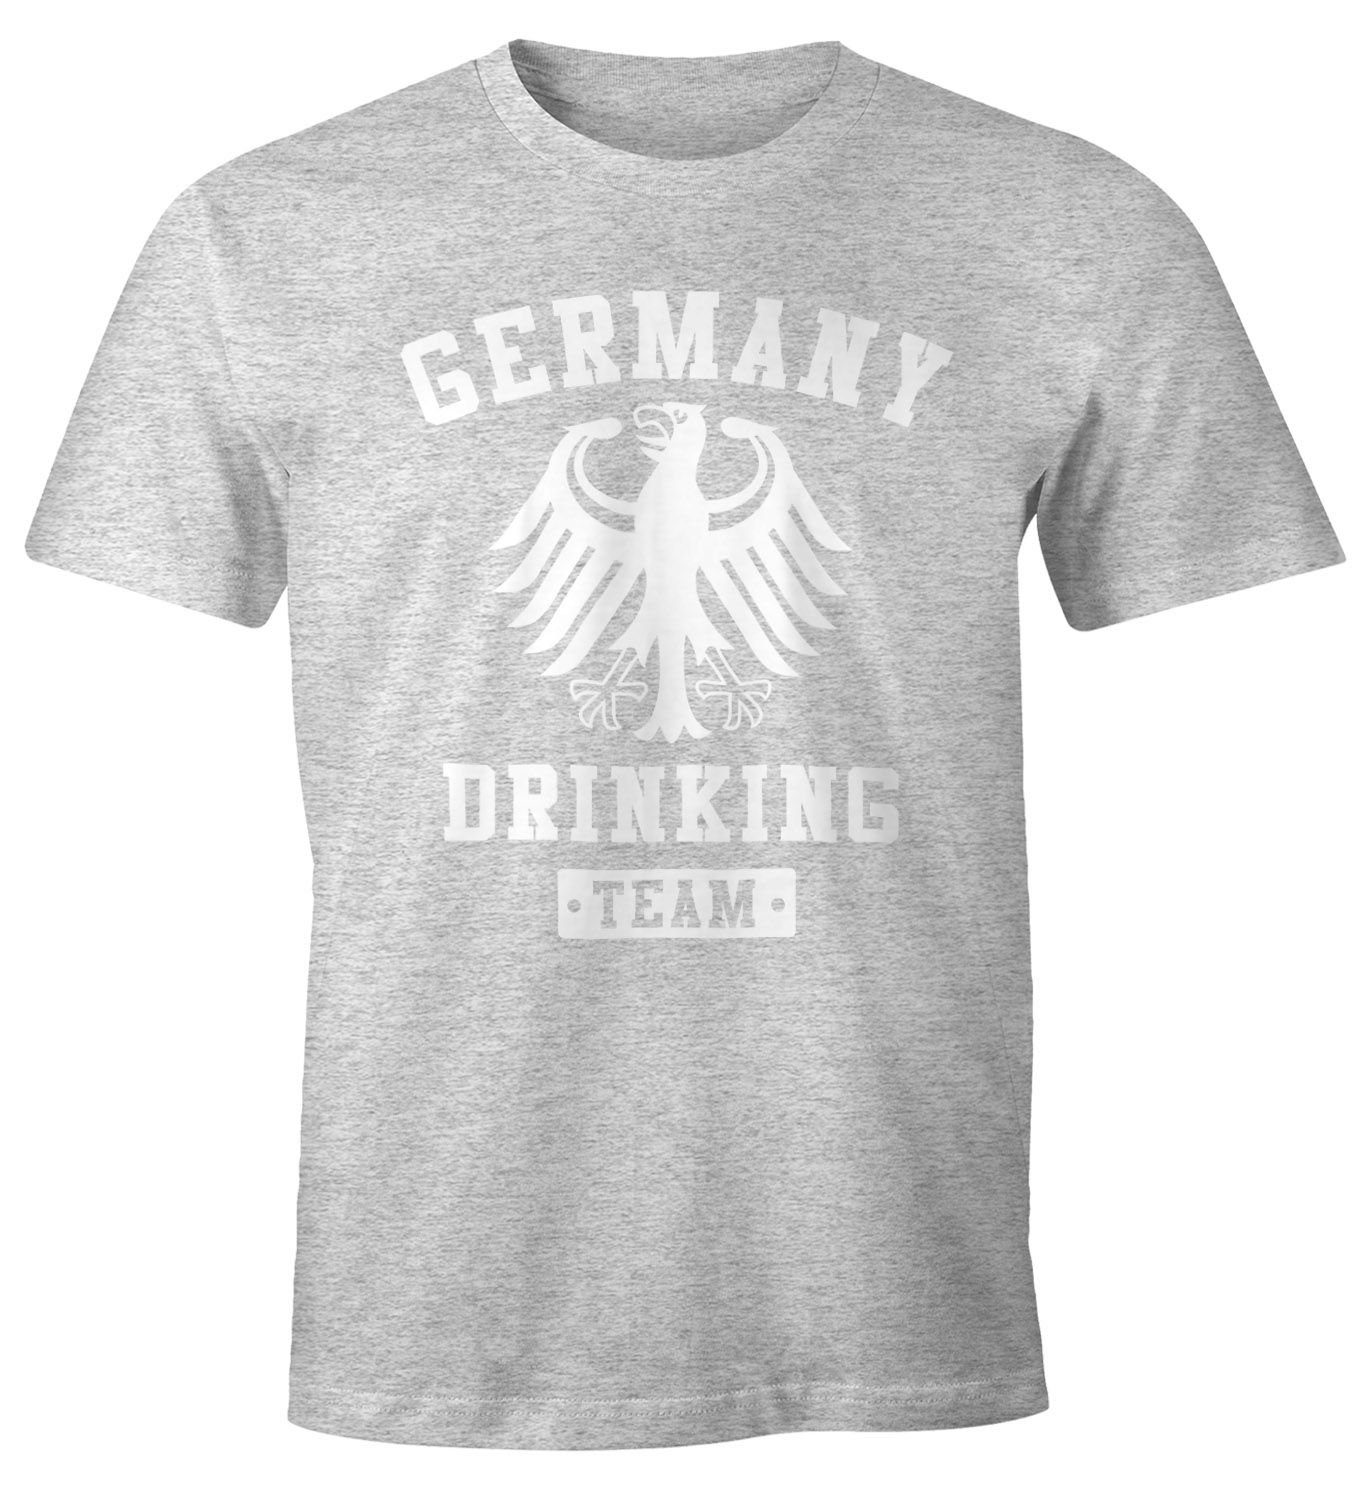 Germany Drinking Moonworks® Deutschland Herren Bier T-Shirt Print-Shirt Fun-Shirt Team grau Adler MoonWorks mit Print